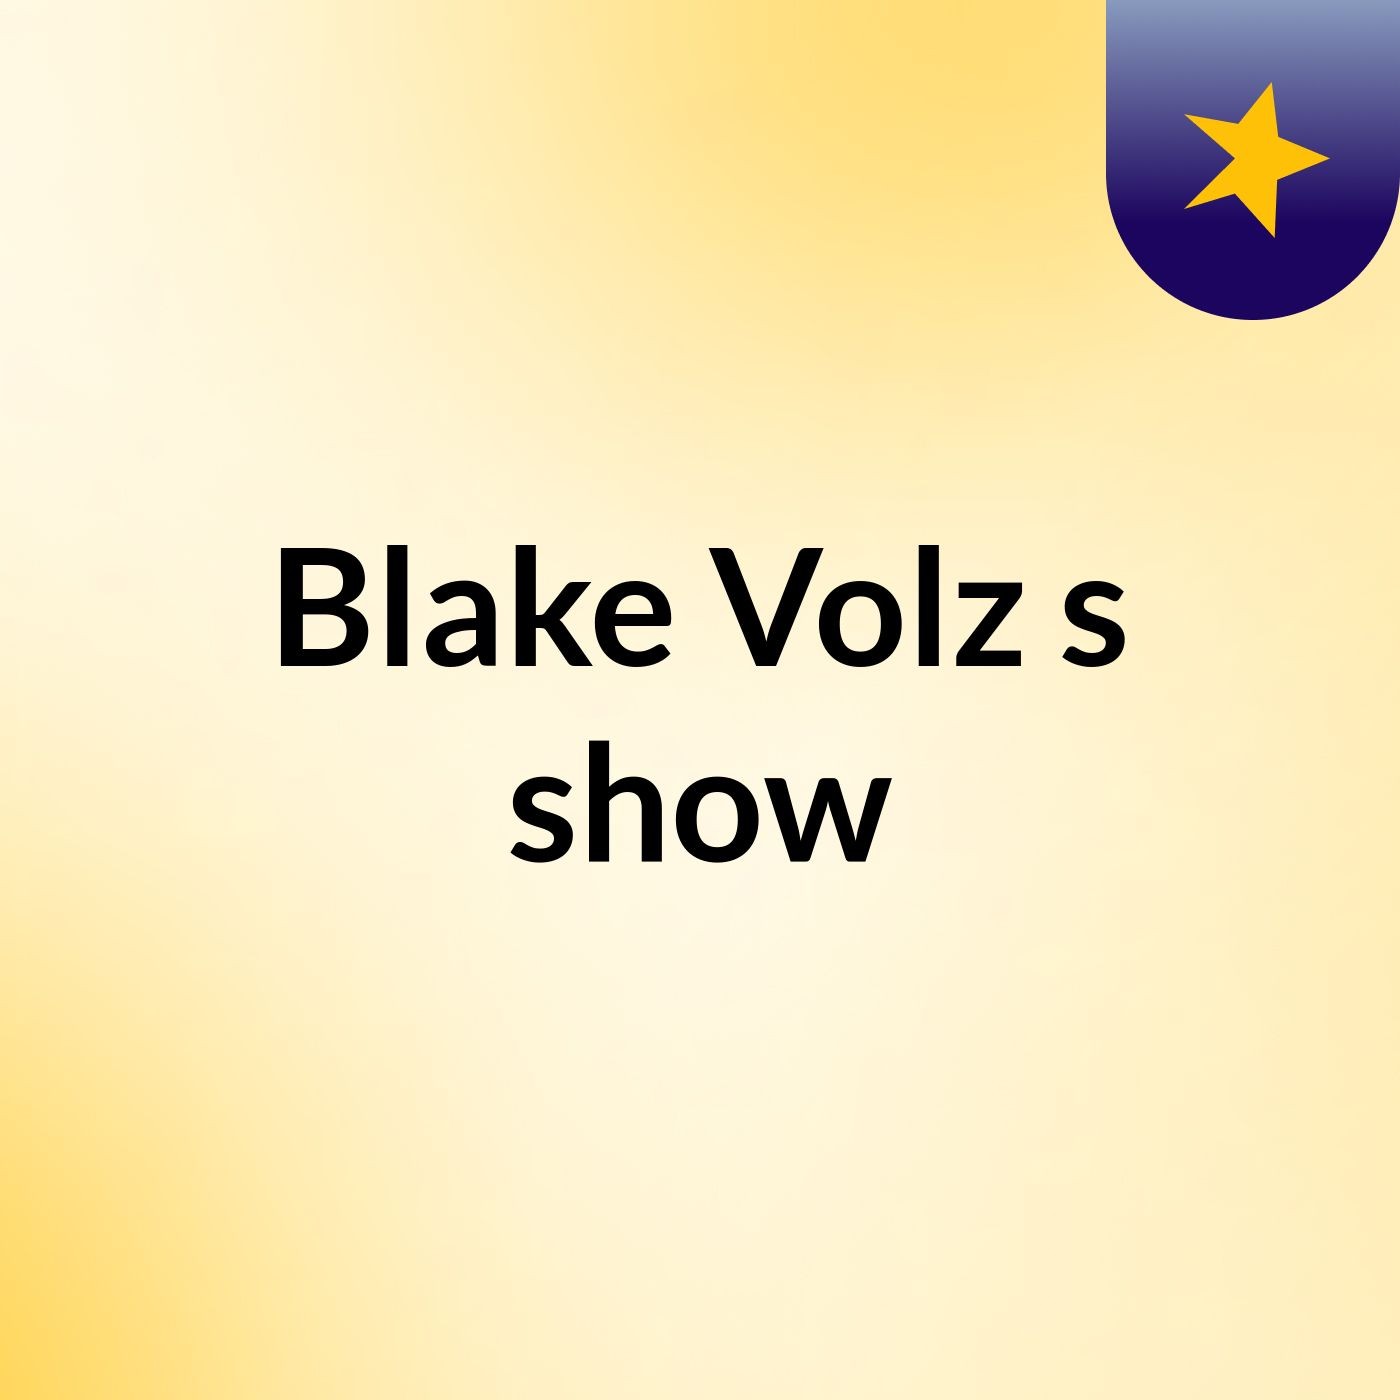 Blake Volz's show